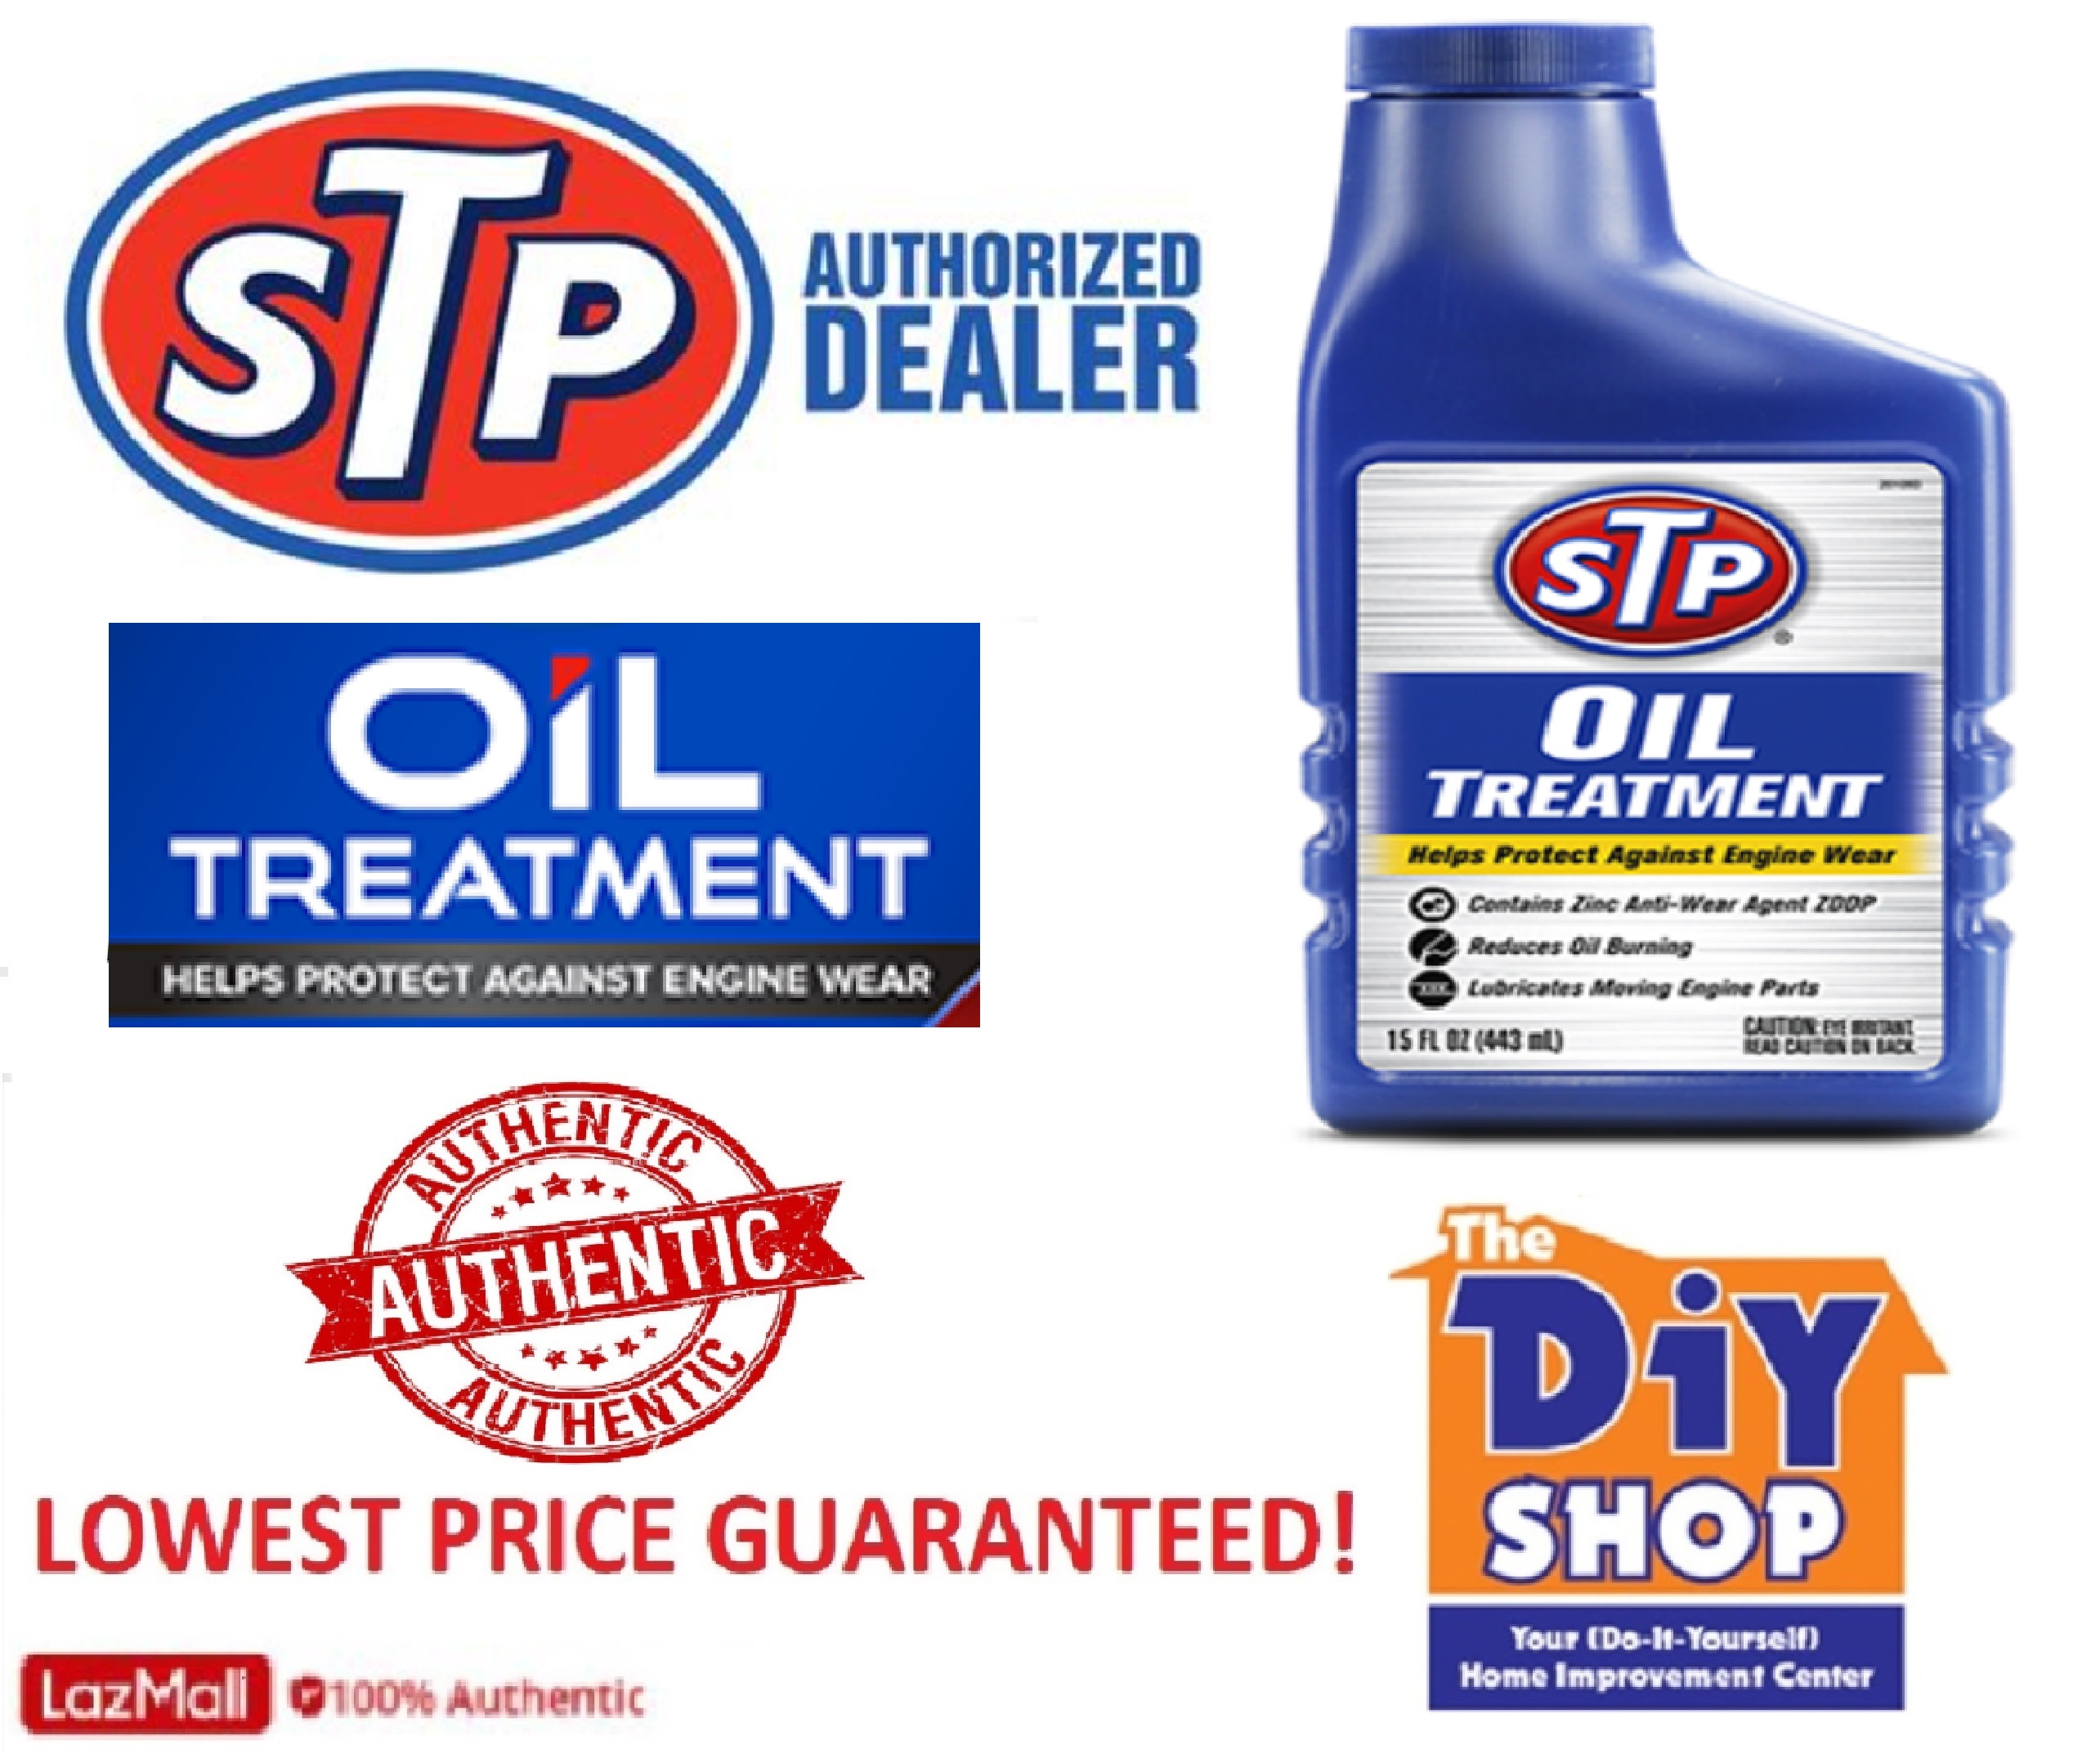 STP High Mileage Oil Treatment Stop Leak 15 Fl oz Lazada PH